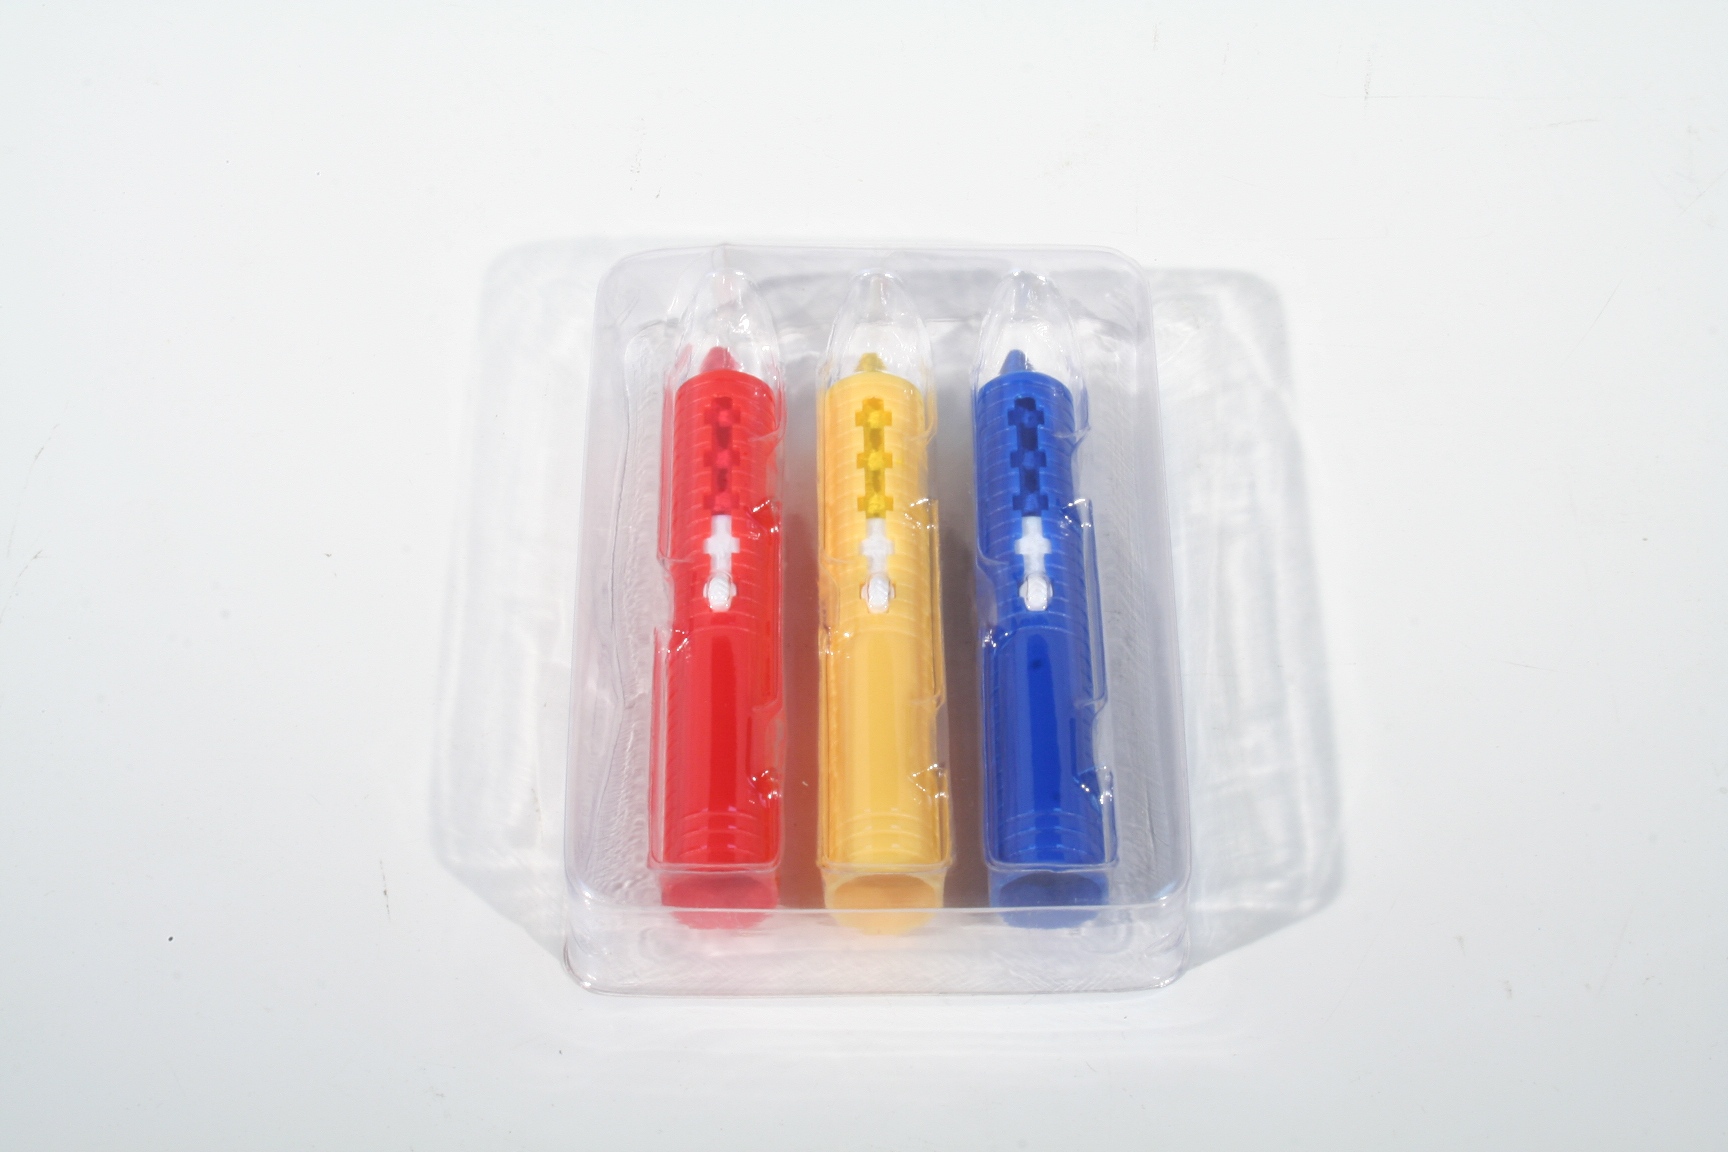 spare Parts - Postman Pat Bath Set Crayons (3)